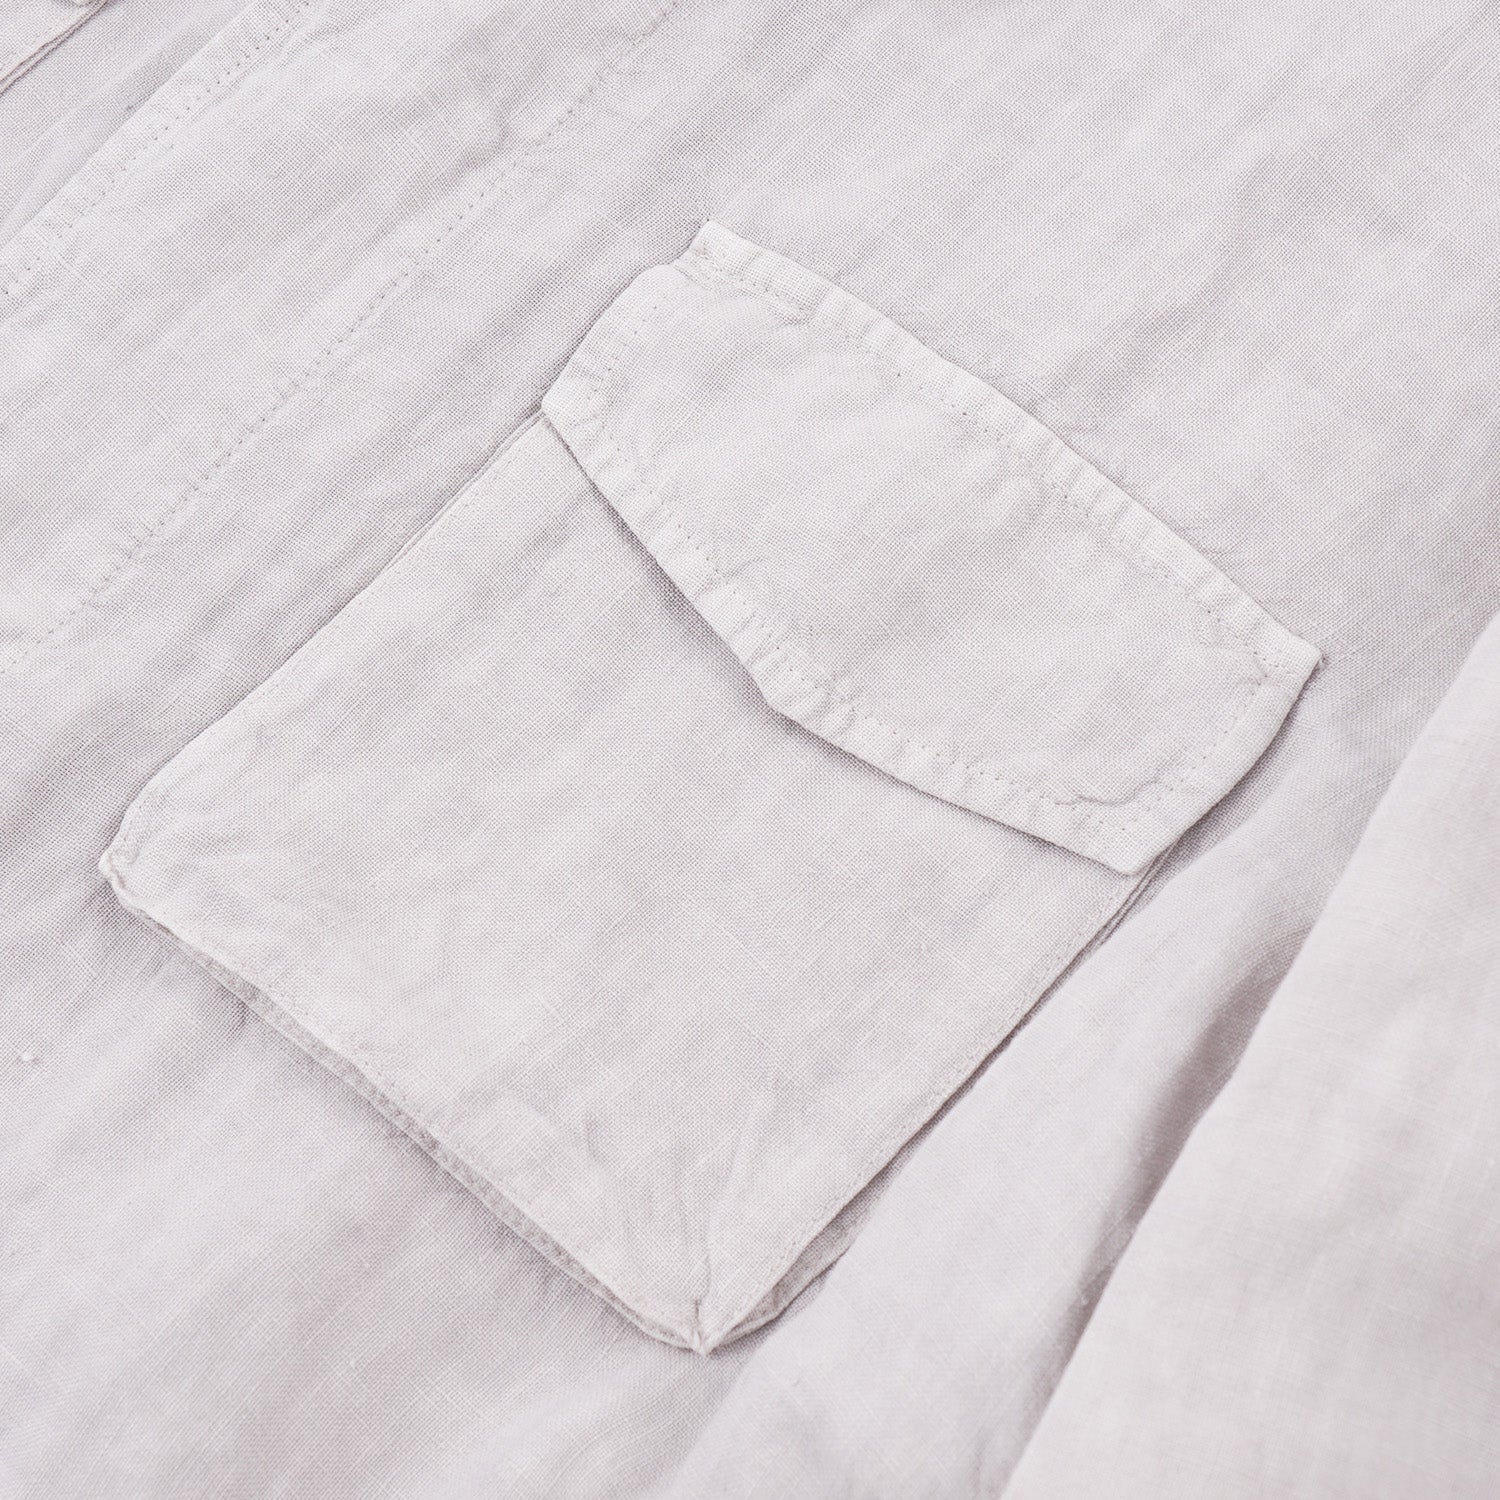 Boglioli Pure Linen Field Jacket - Top Shelf Apparel